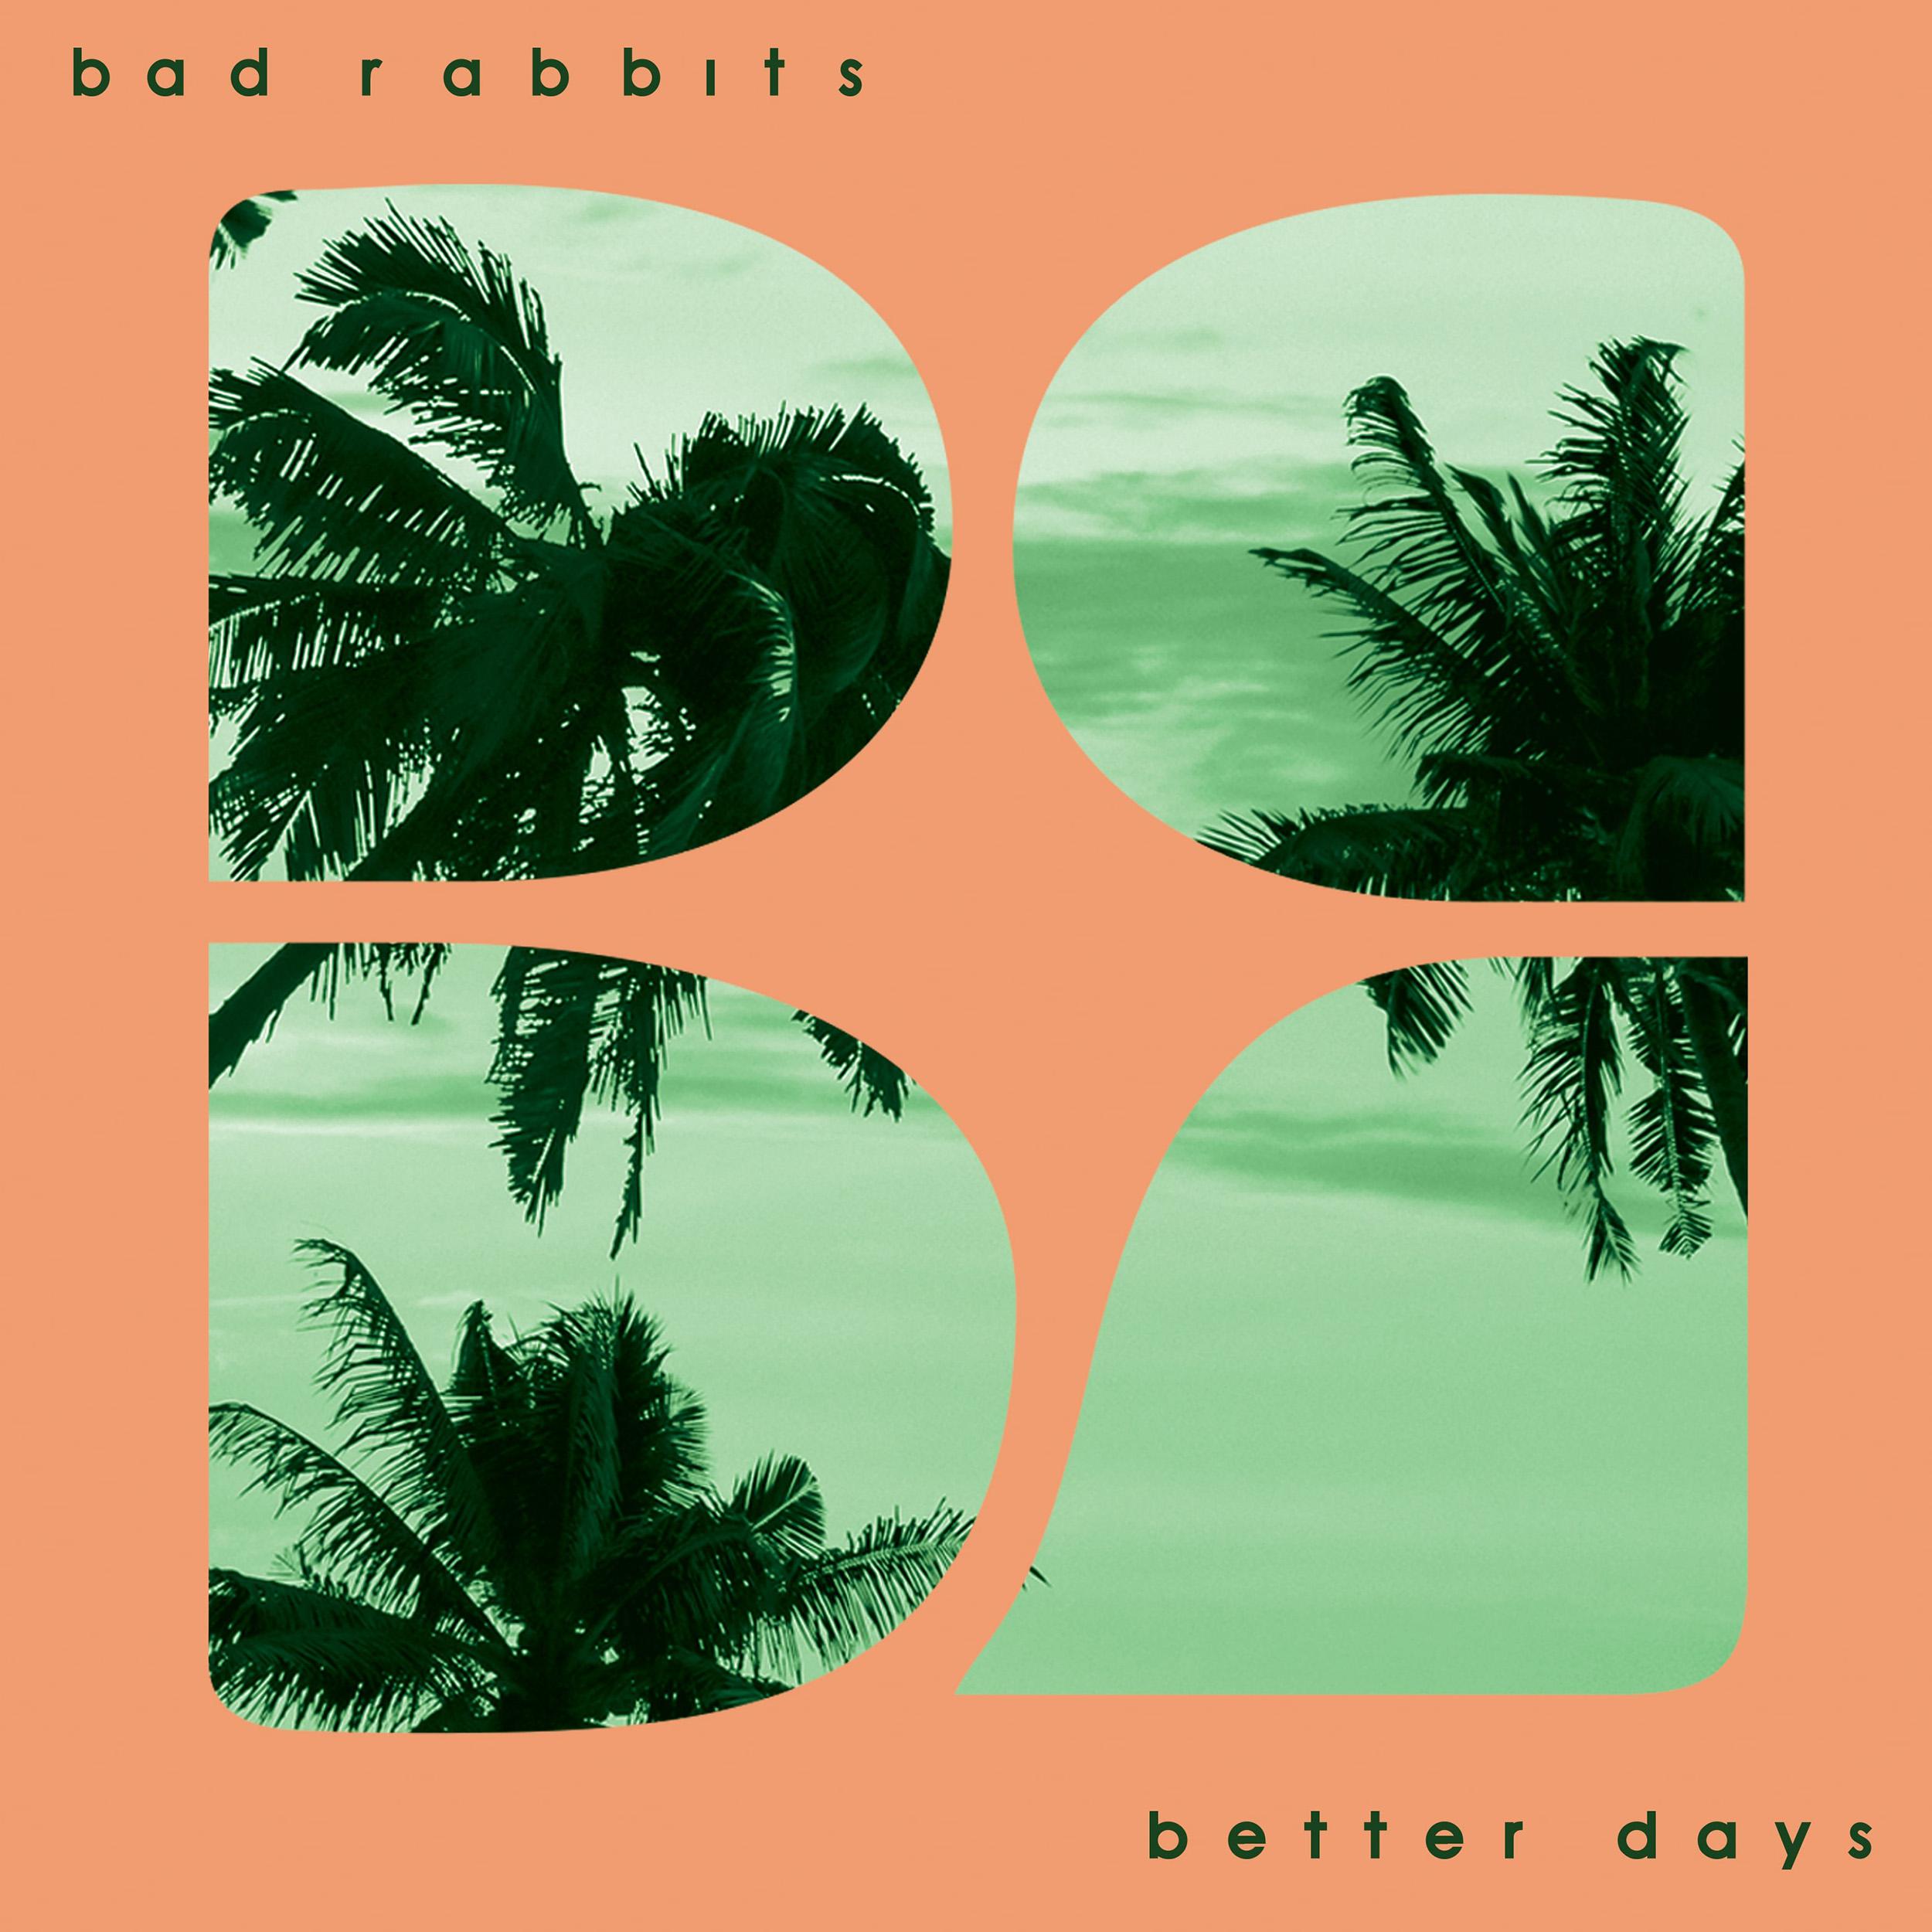 Bad Rabbits - Better Days